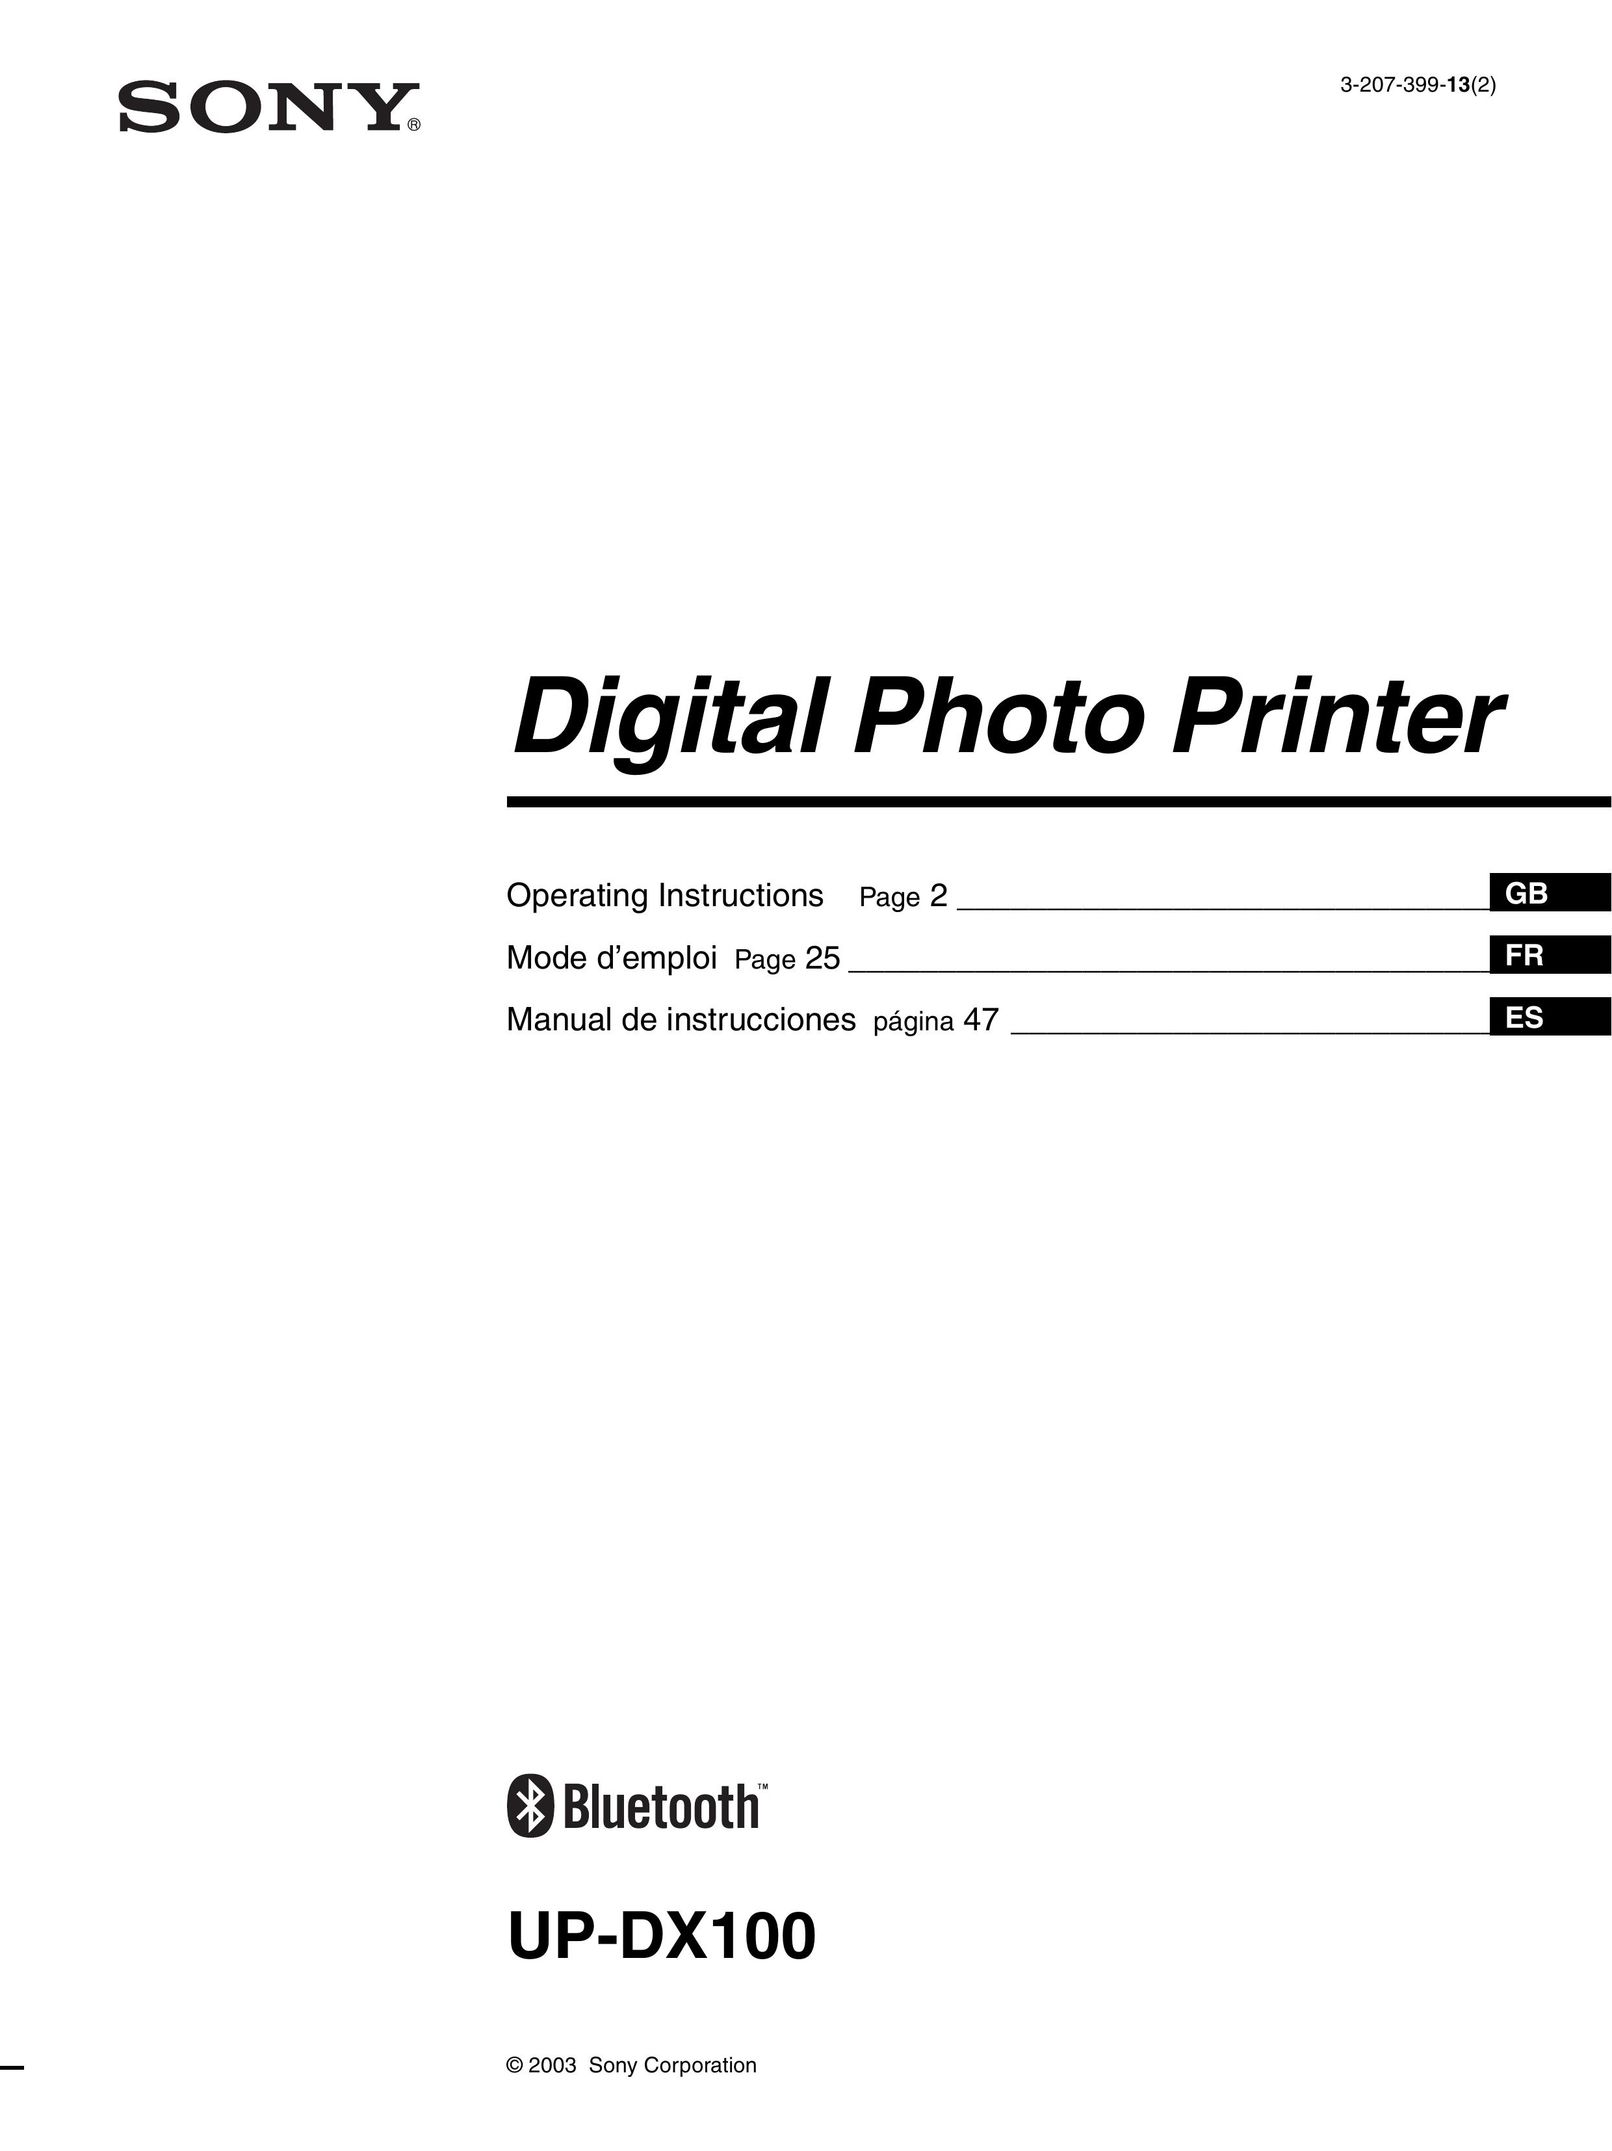 Sony UPD-X100 Printer User Manual